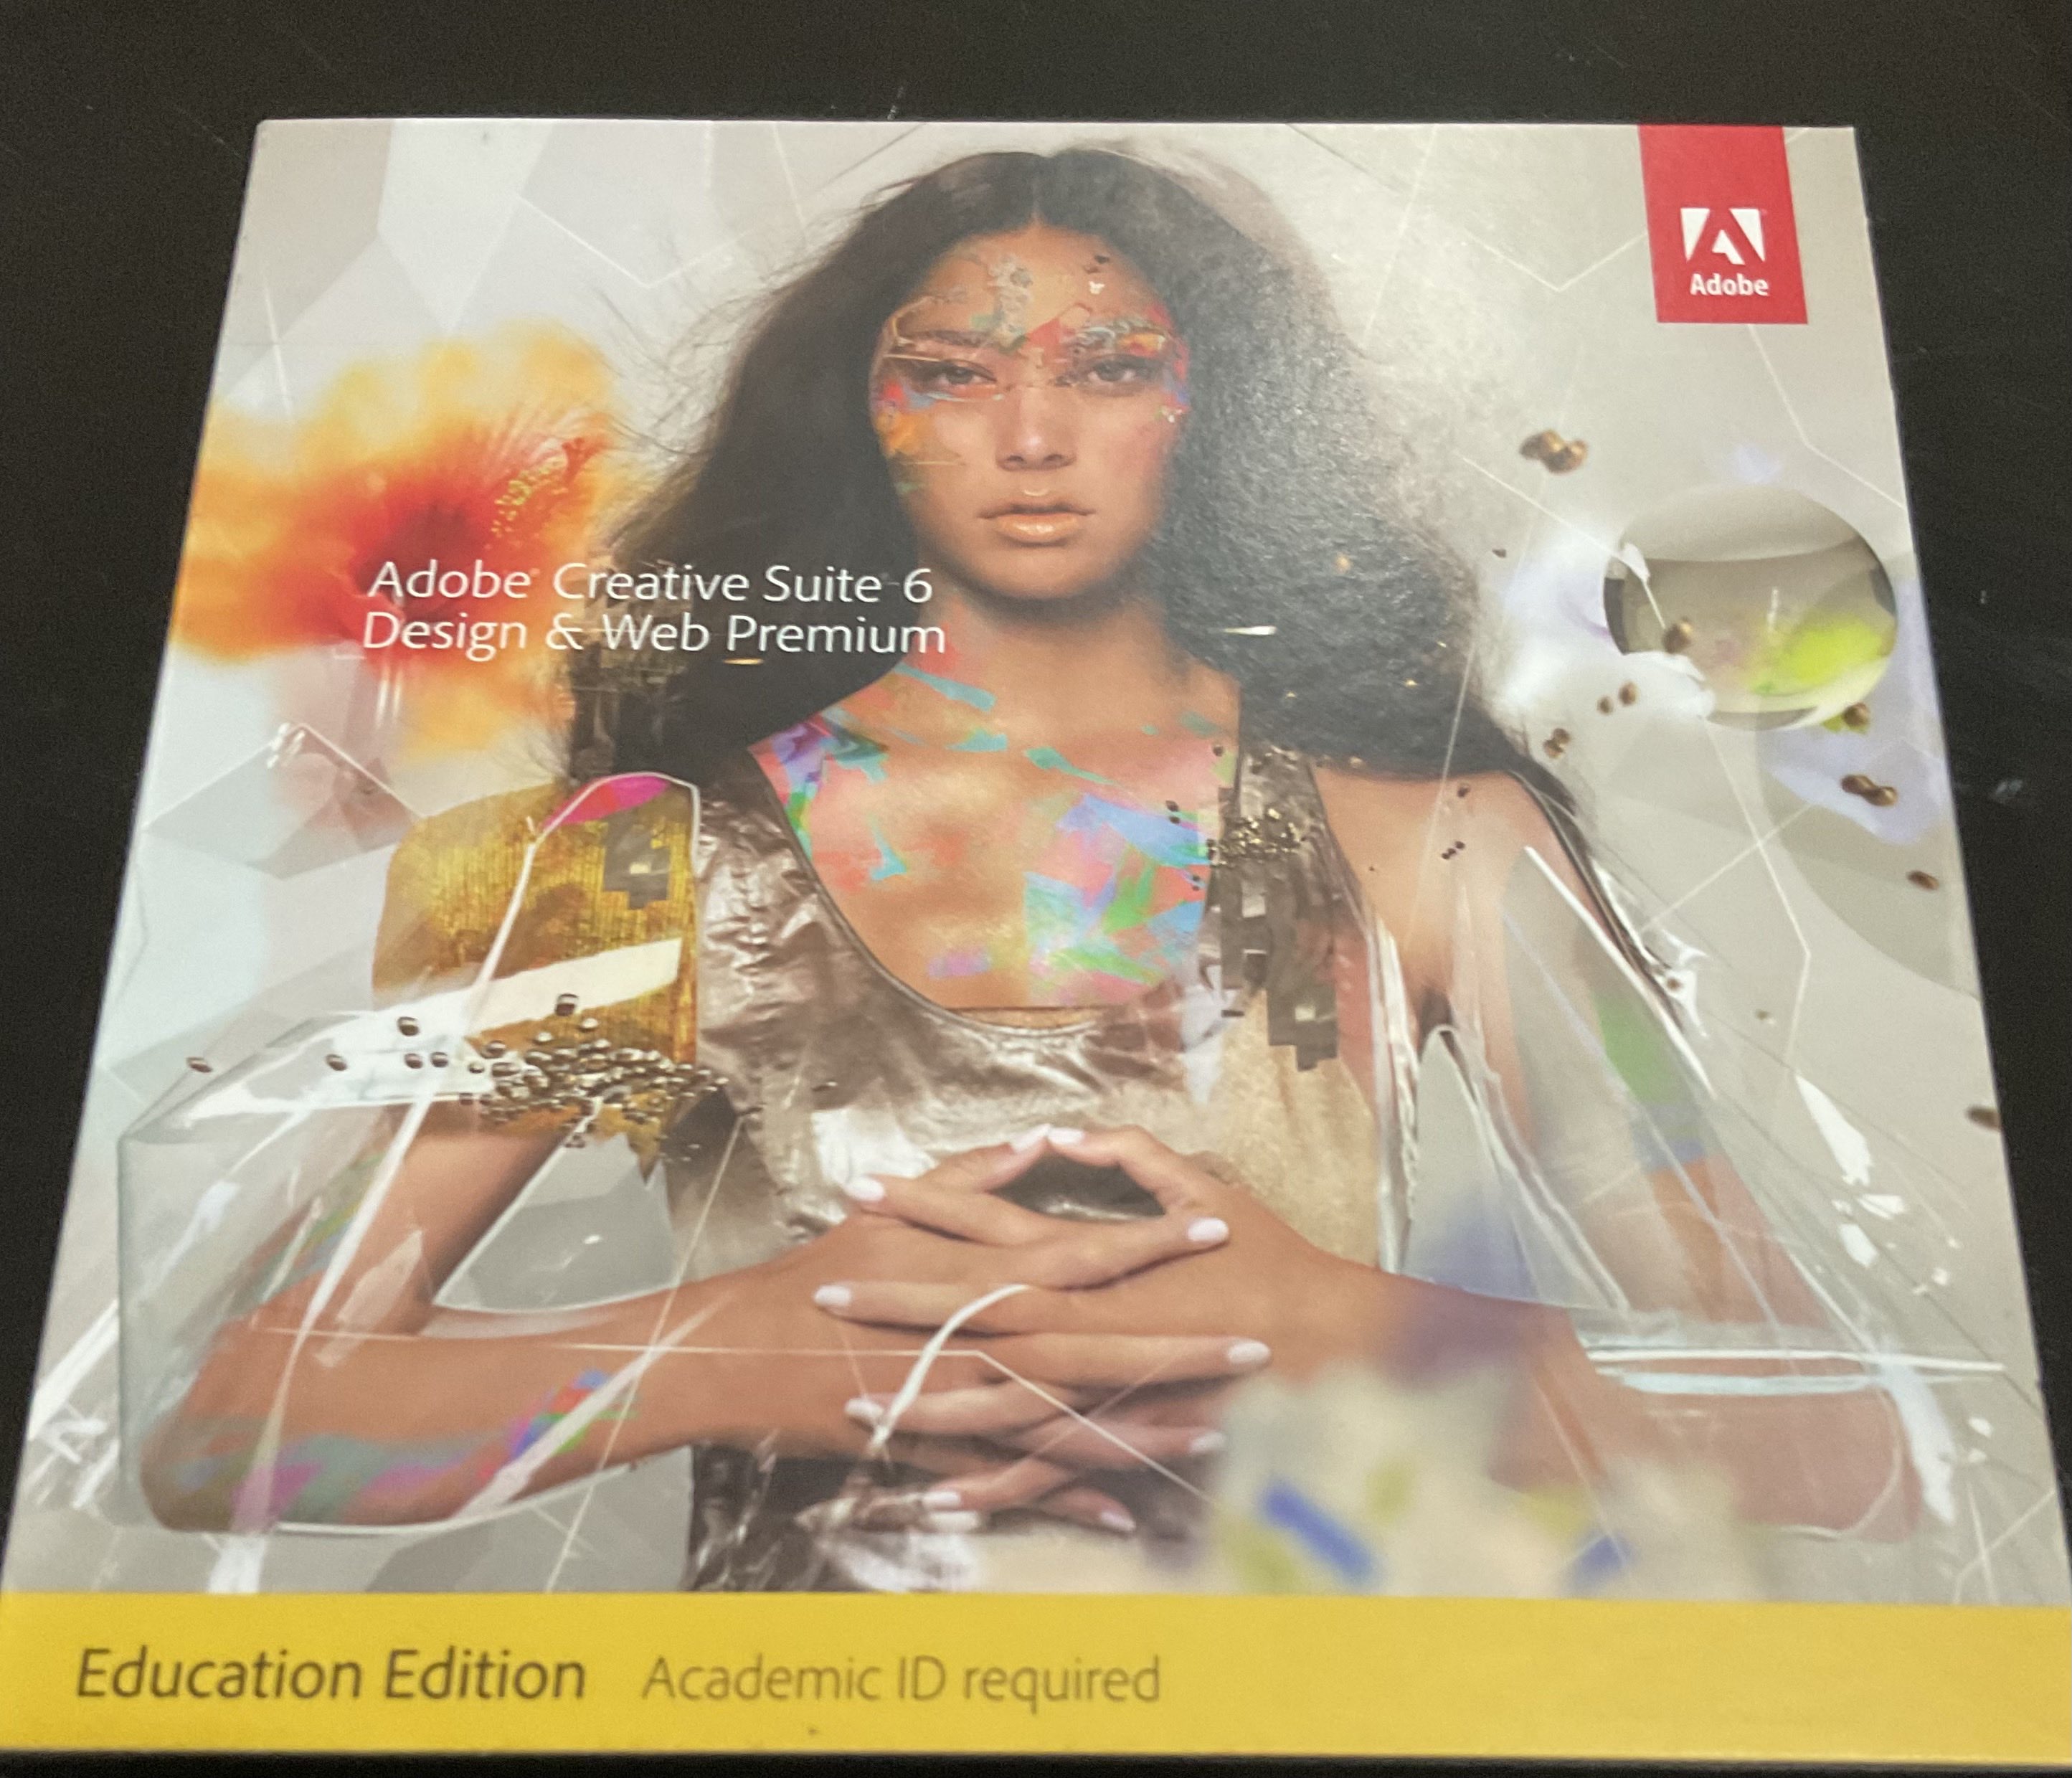 Adobe CS6 Design And Web Premium Home & Student Pack for Windows 